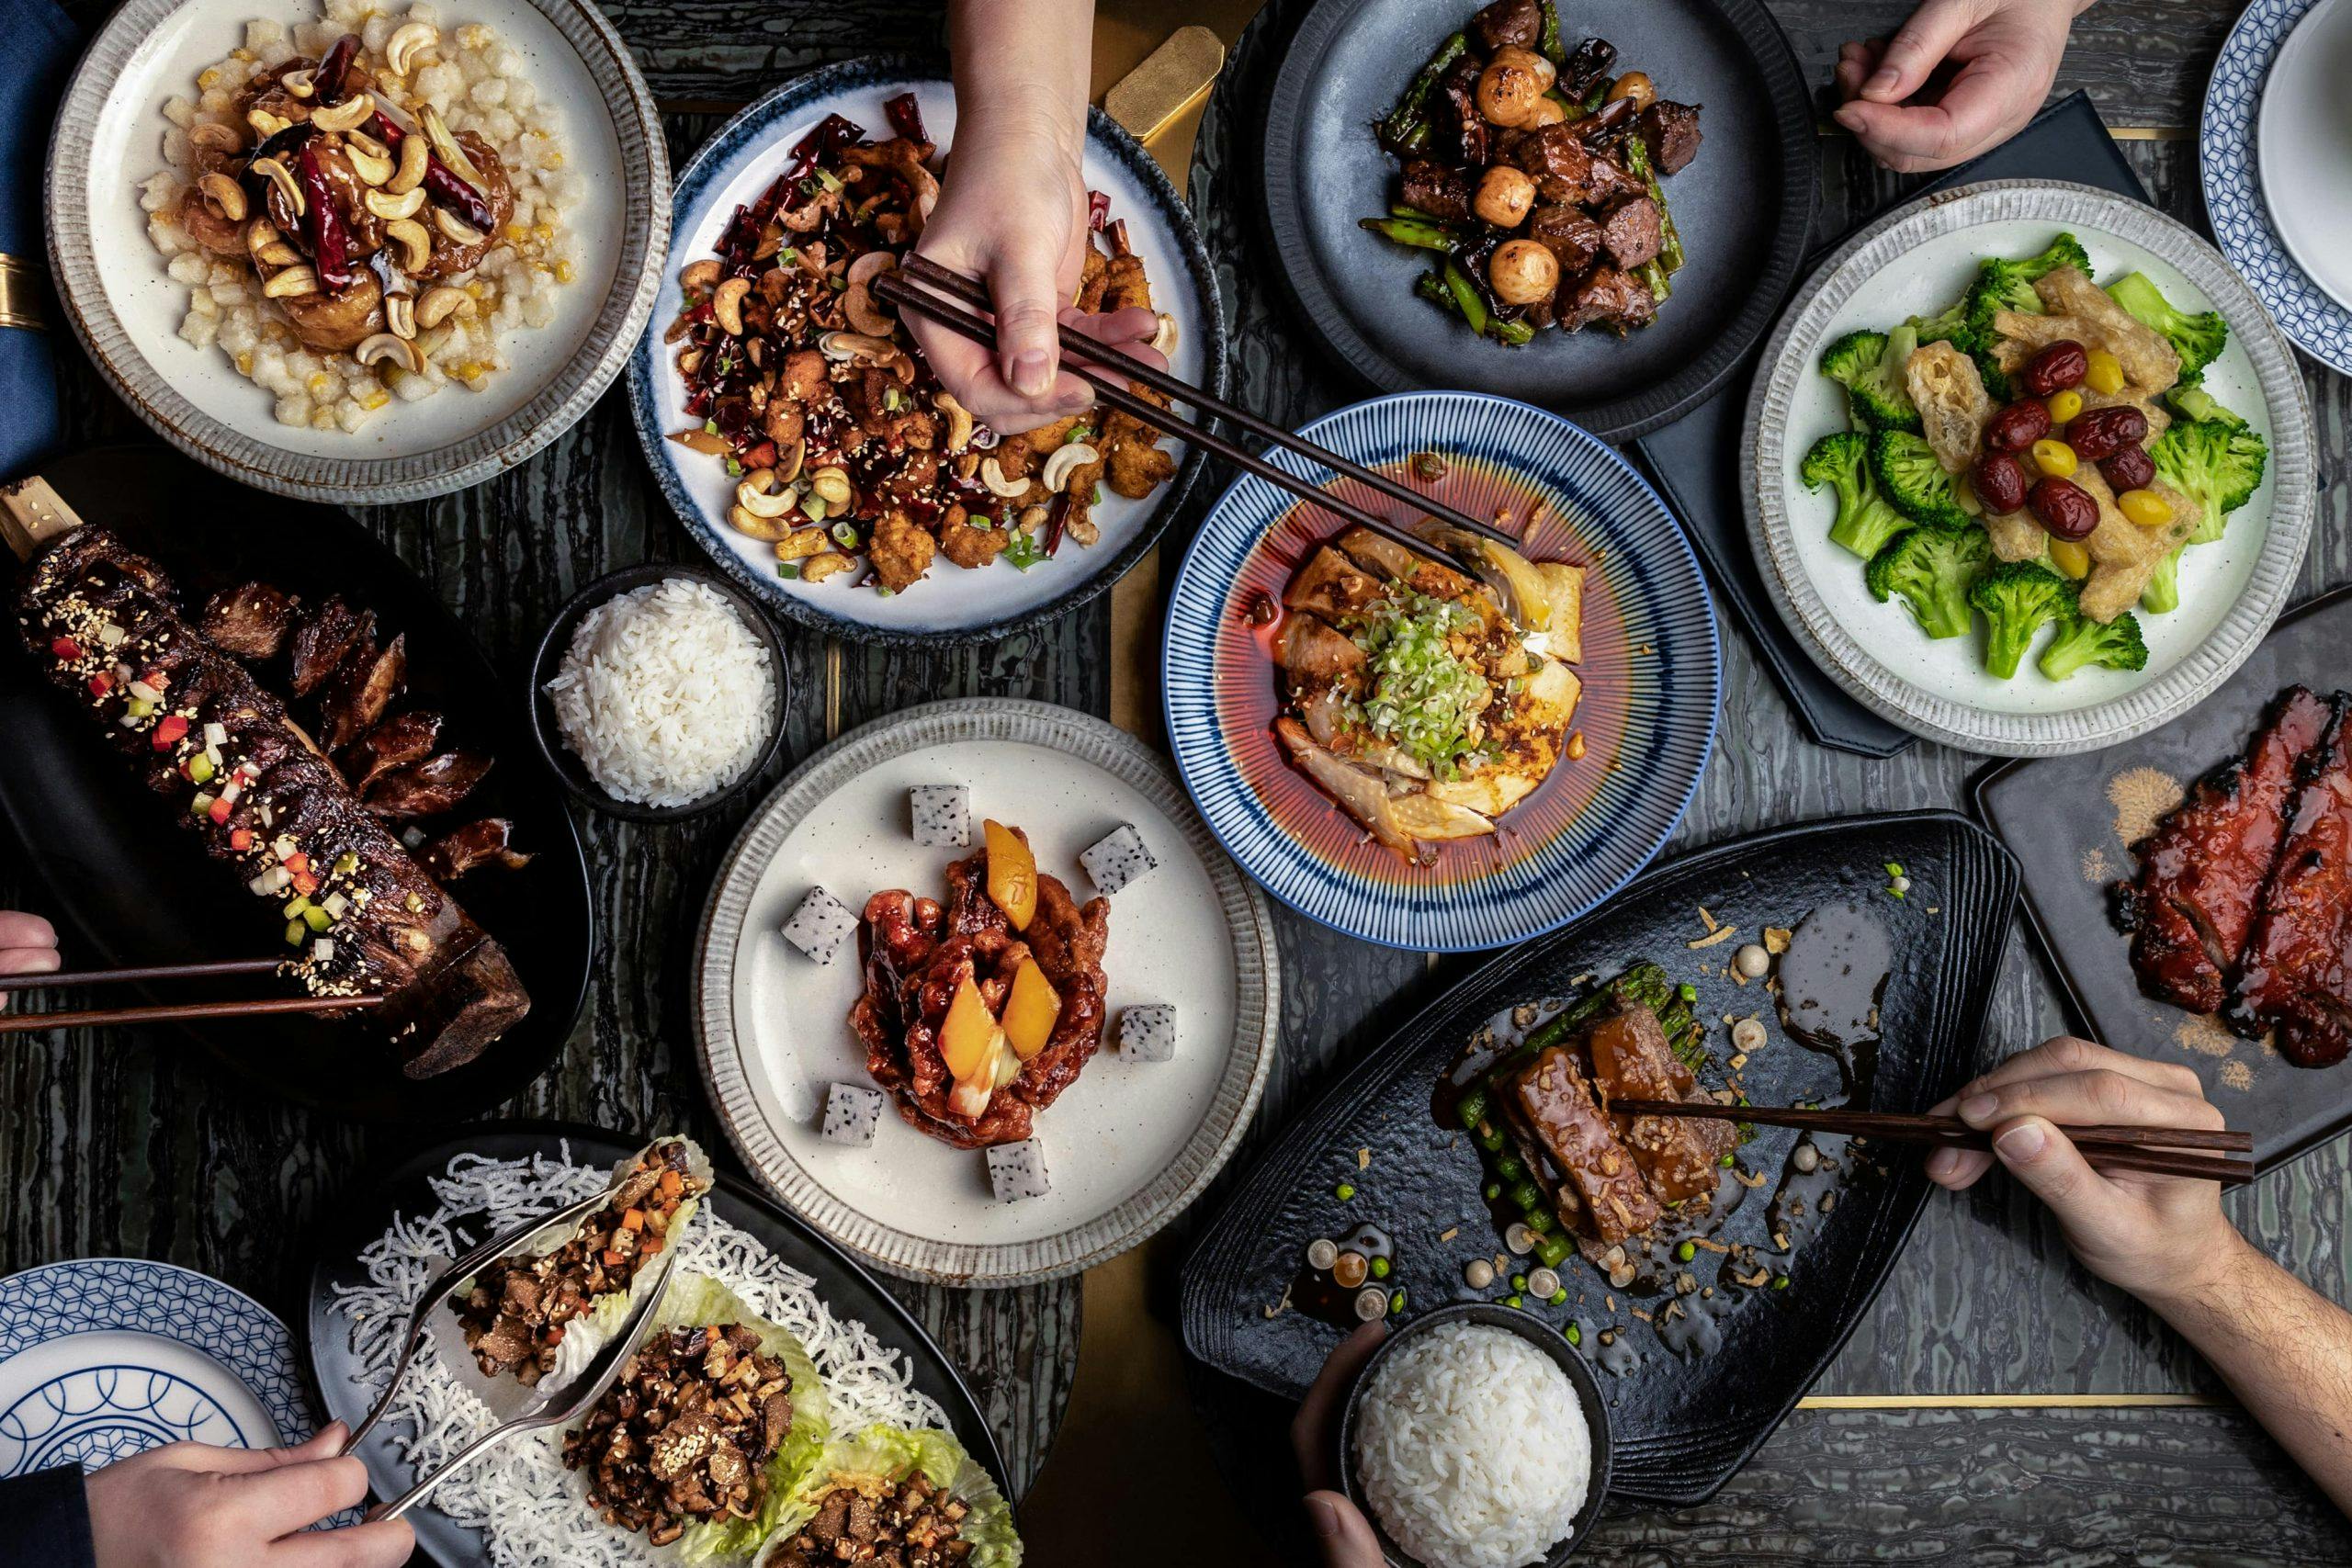 Cantonese cuisine inspired spread